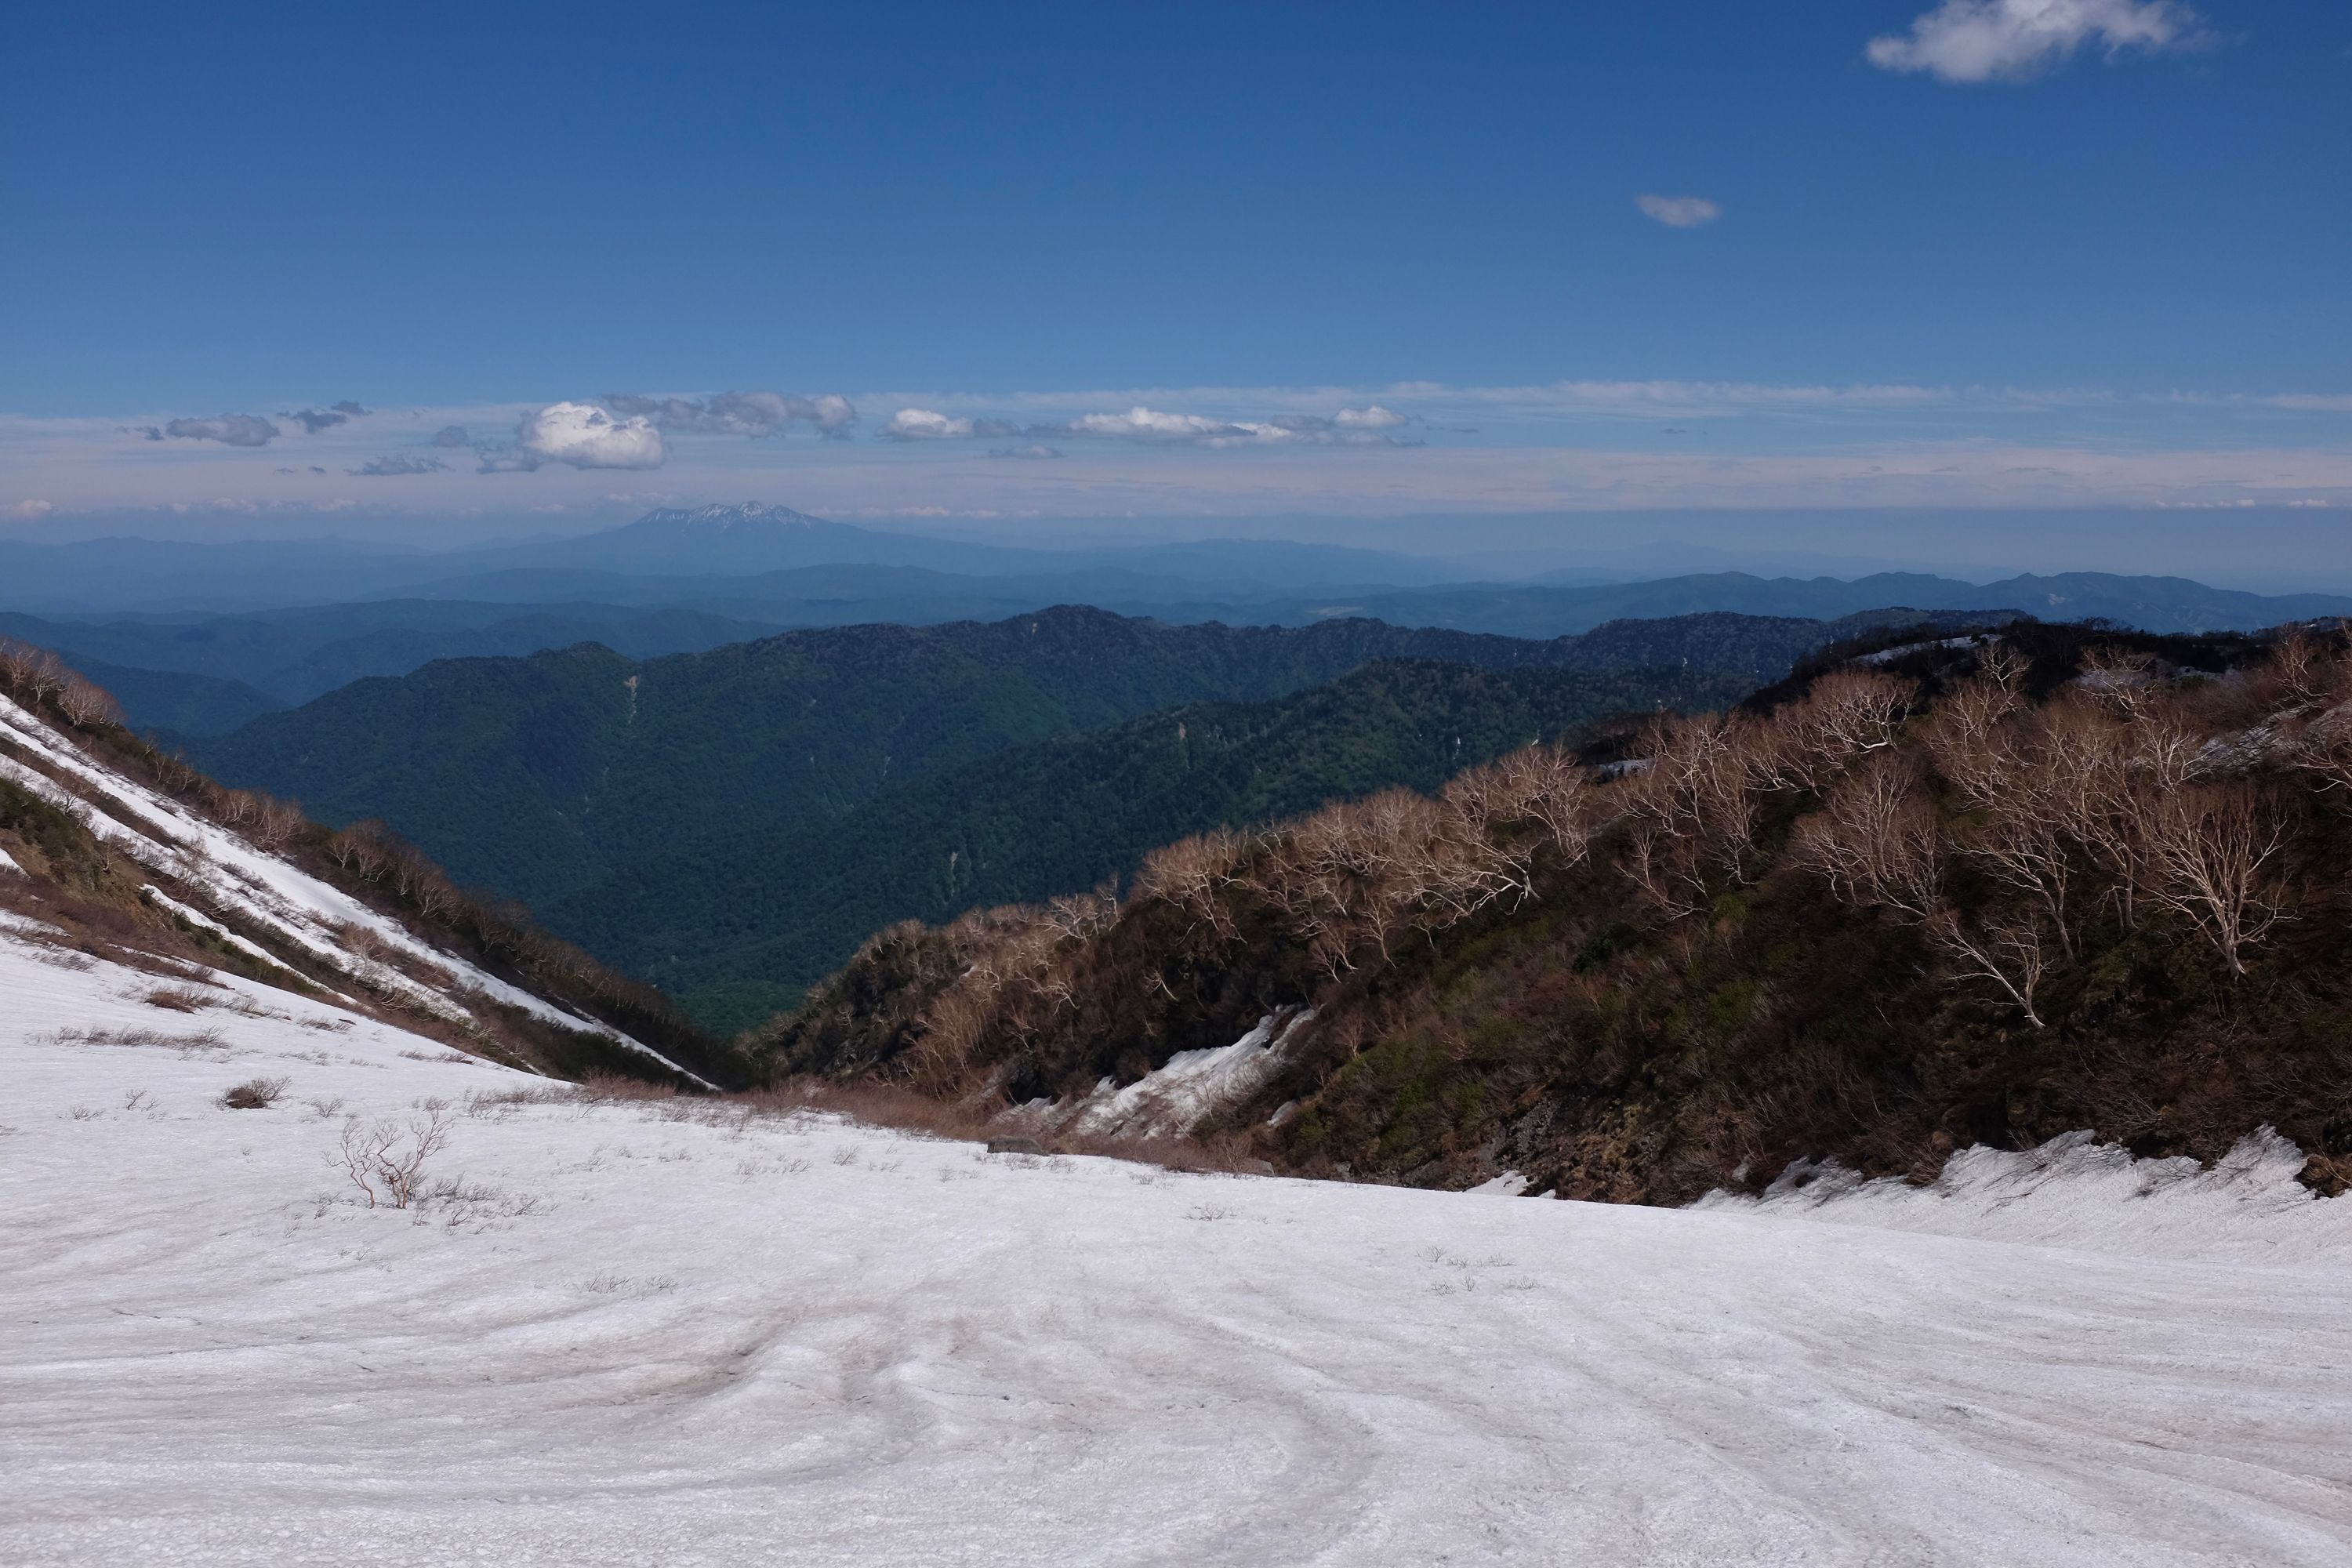 A steep snowfield leading down Hakusan, with Mount Ontake on the horizon.